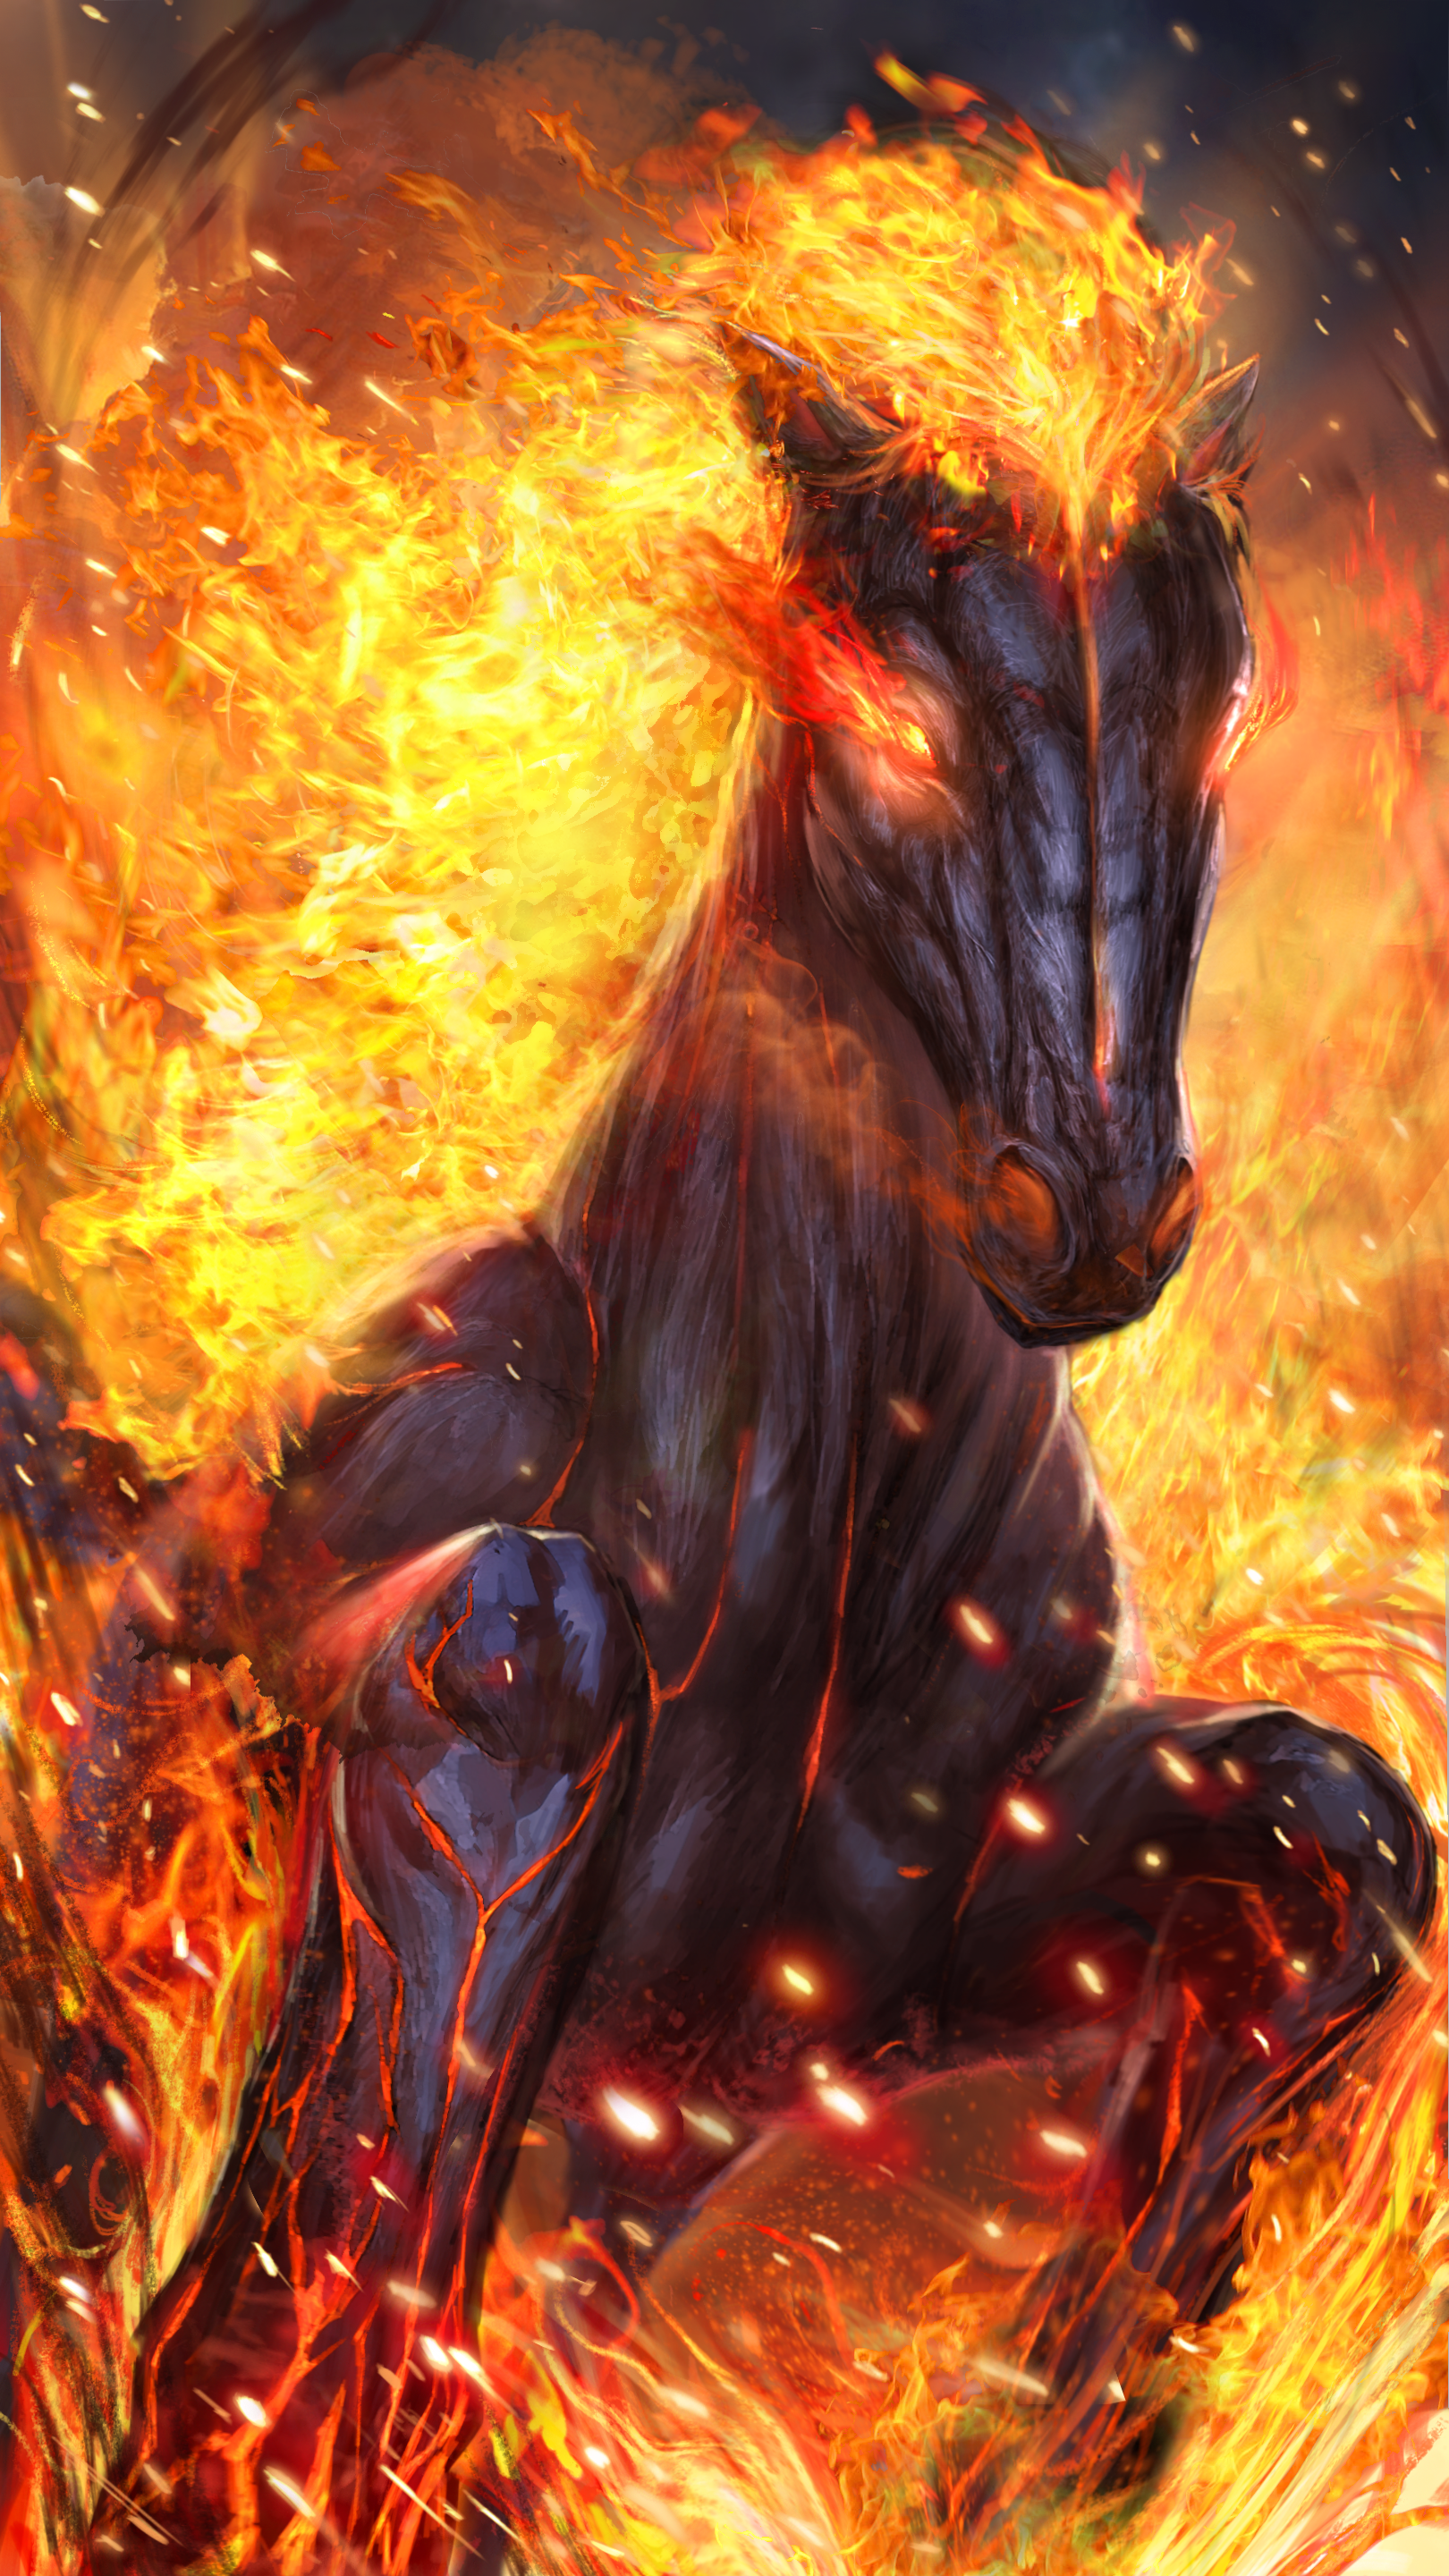 Hot fire horse live wallpaper!. Horses, Mythical creatures art, Fire horse